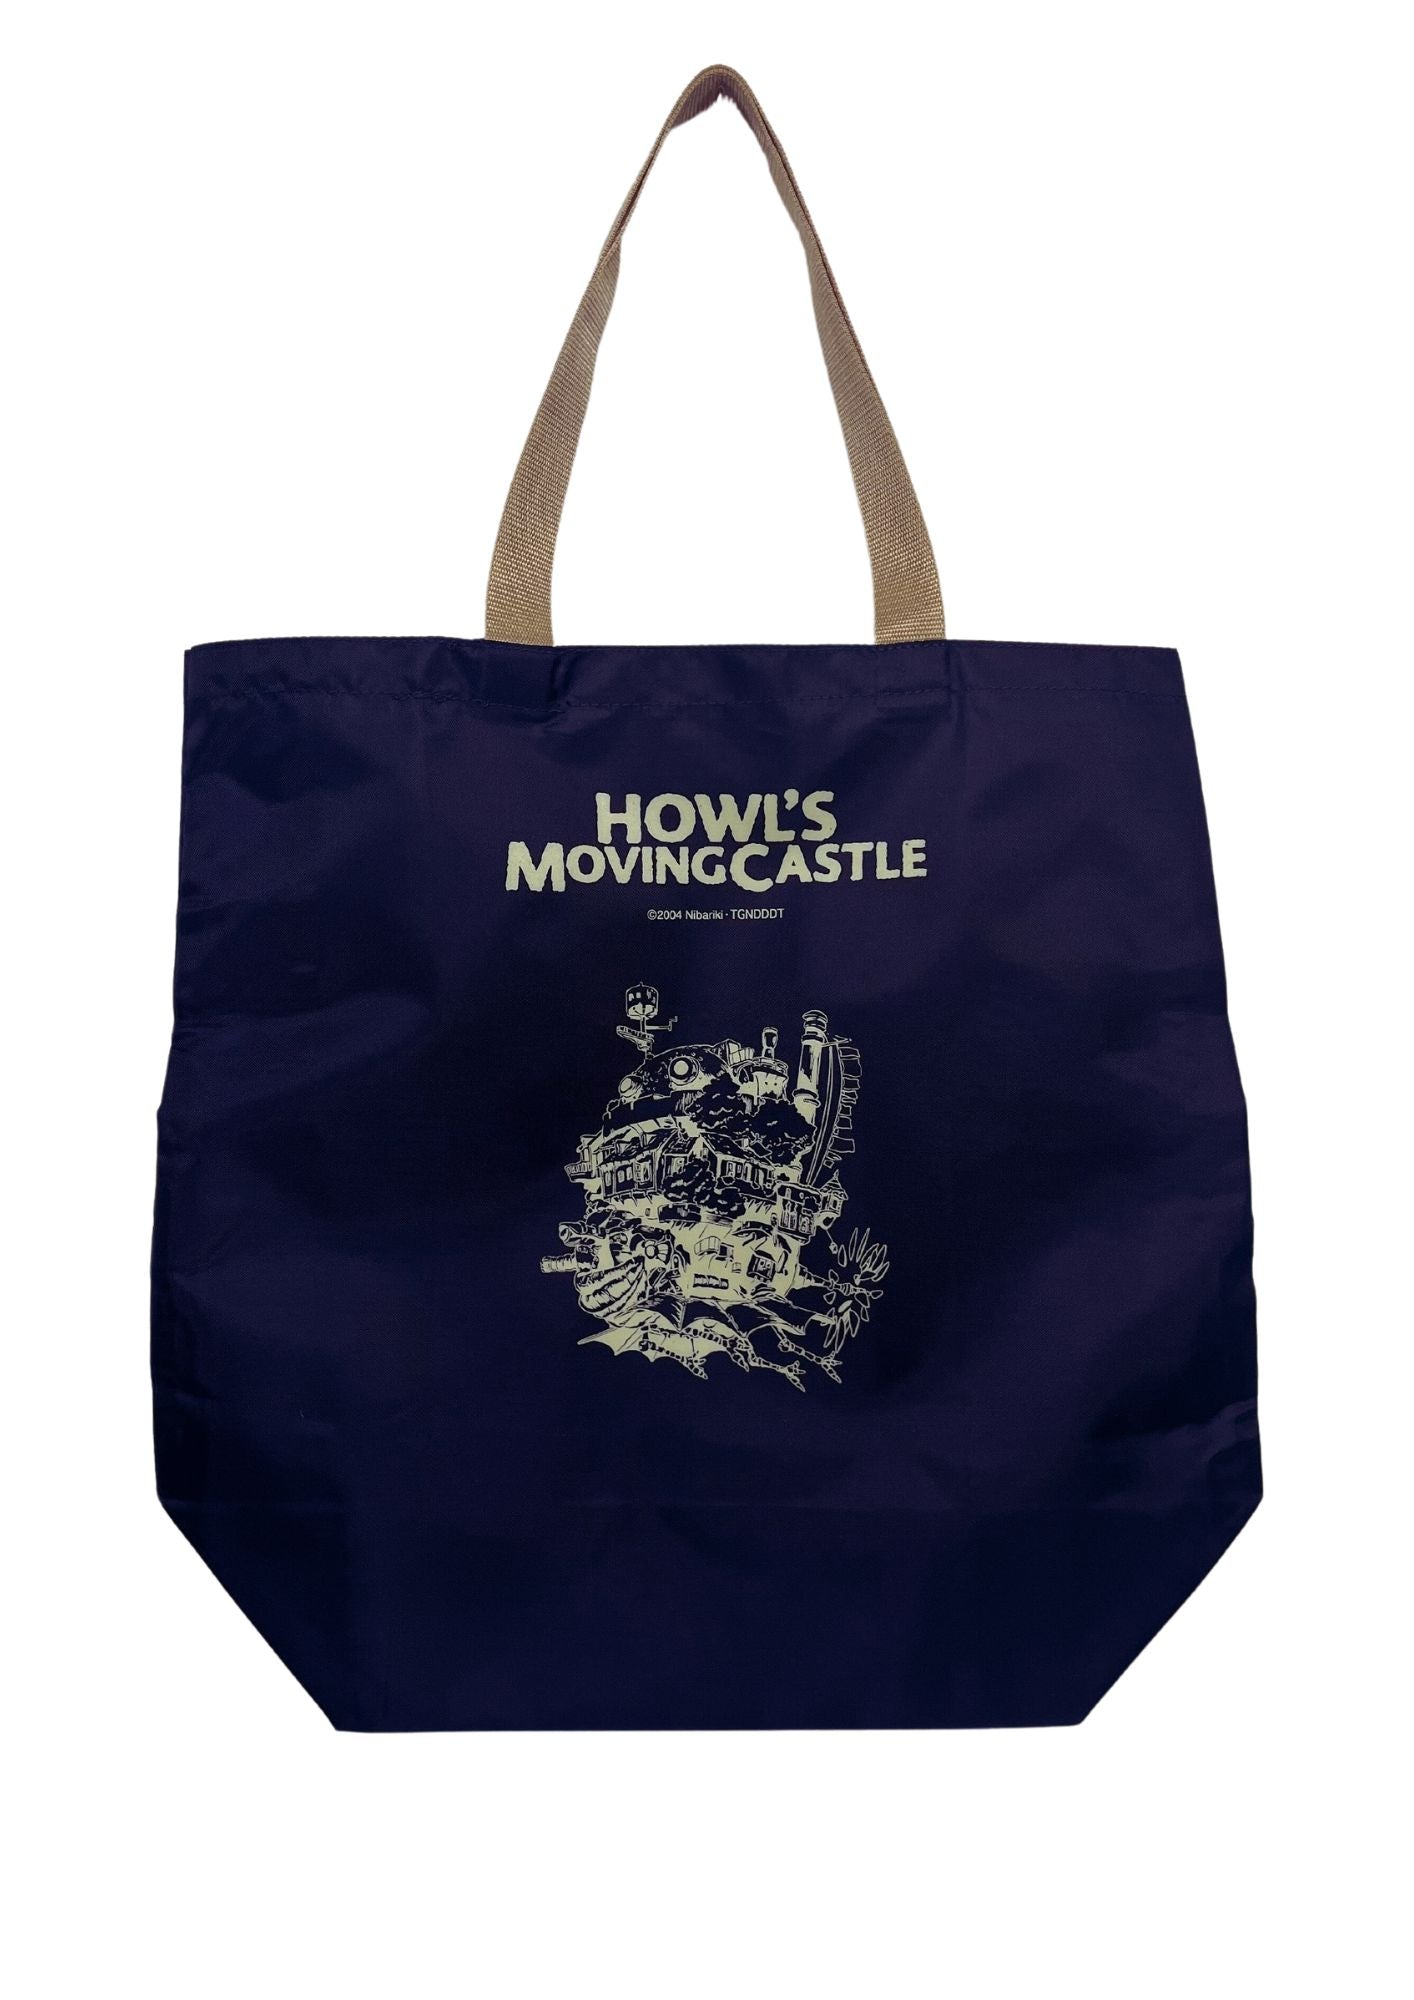 Howl's Moving Castle DVD Pre-order Prize Eco Bag